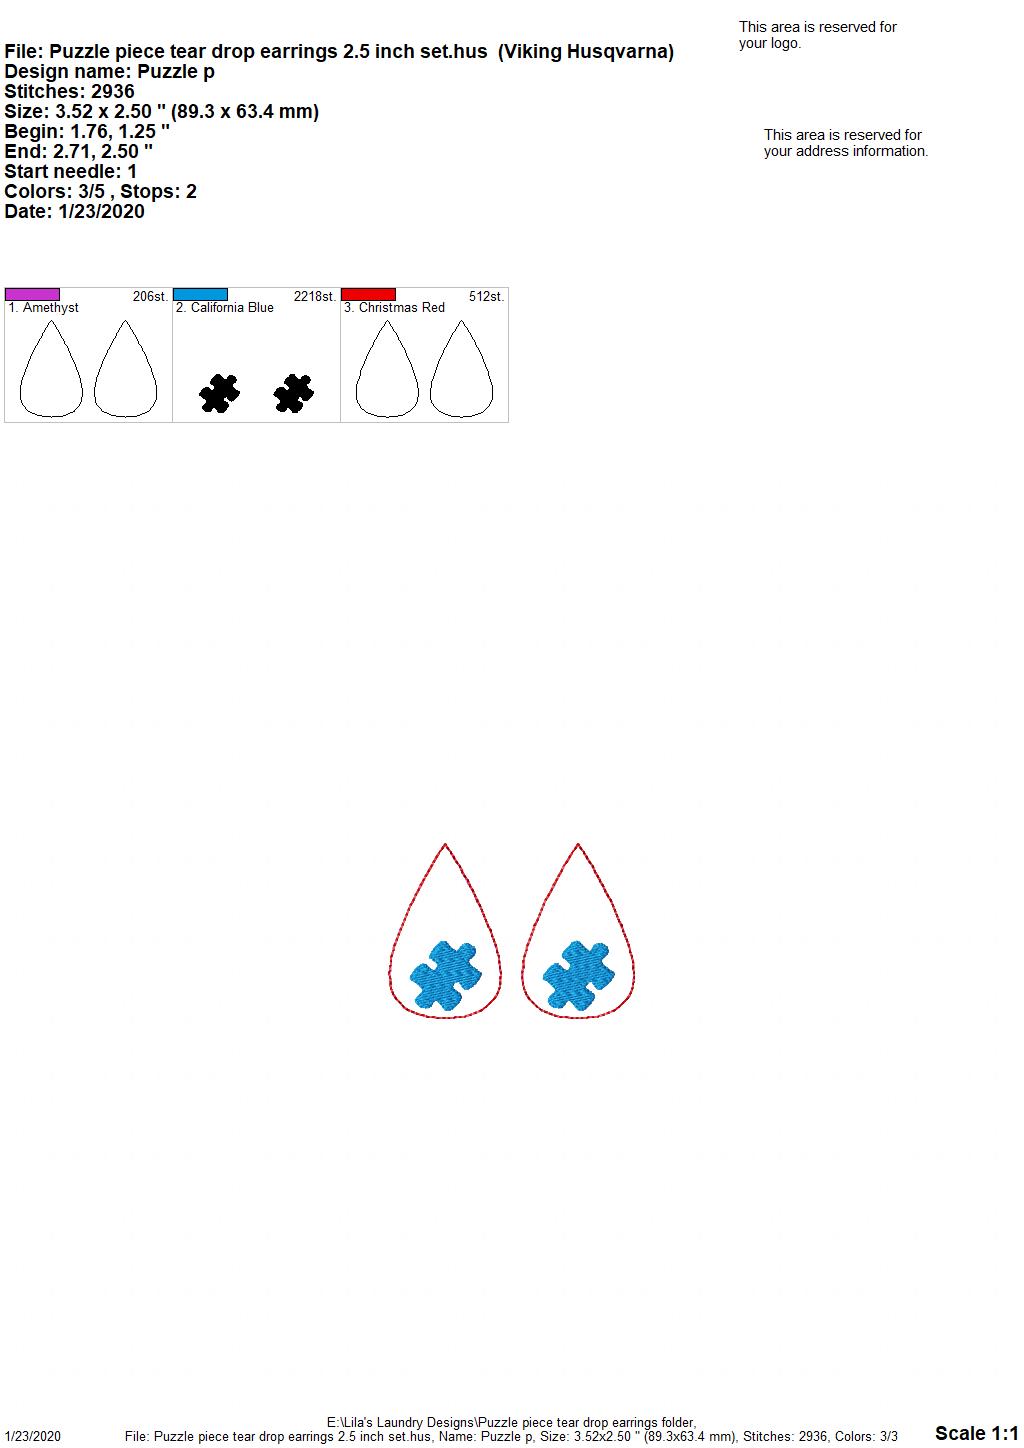 Puzzle Piece Tear Drop Earrings - 3 sizes - Digital Embroidery Design